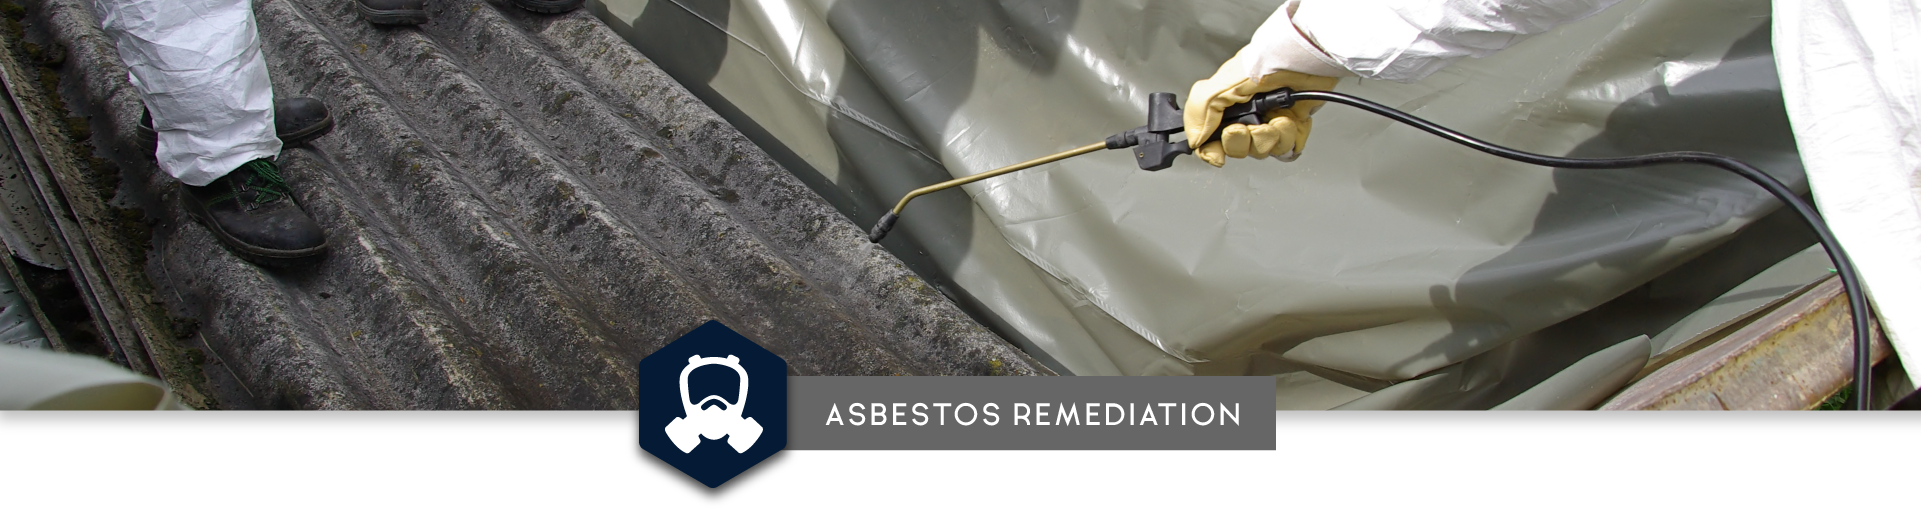 asbestos environmental remediation services